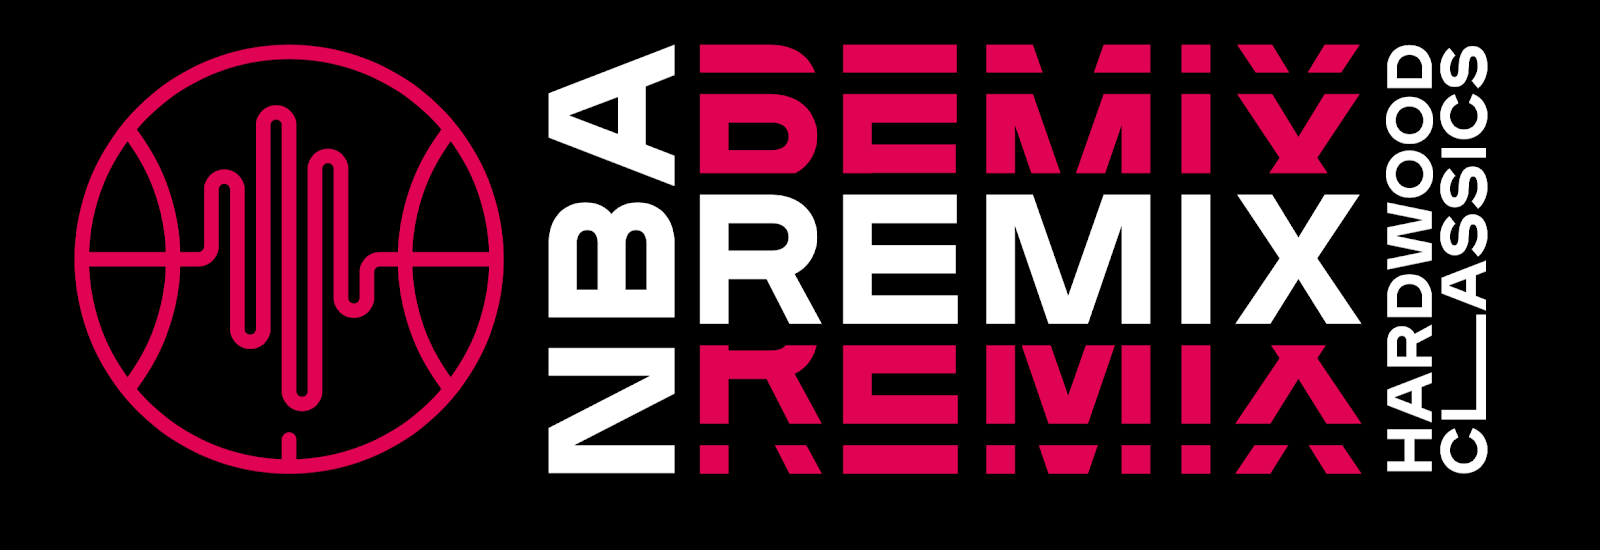 Bleacher Report - The NBA remix jerseys are coming back